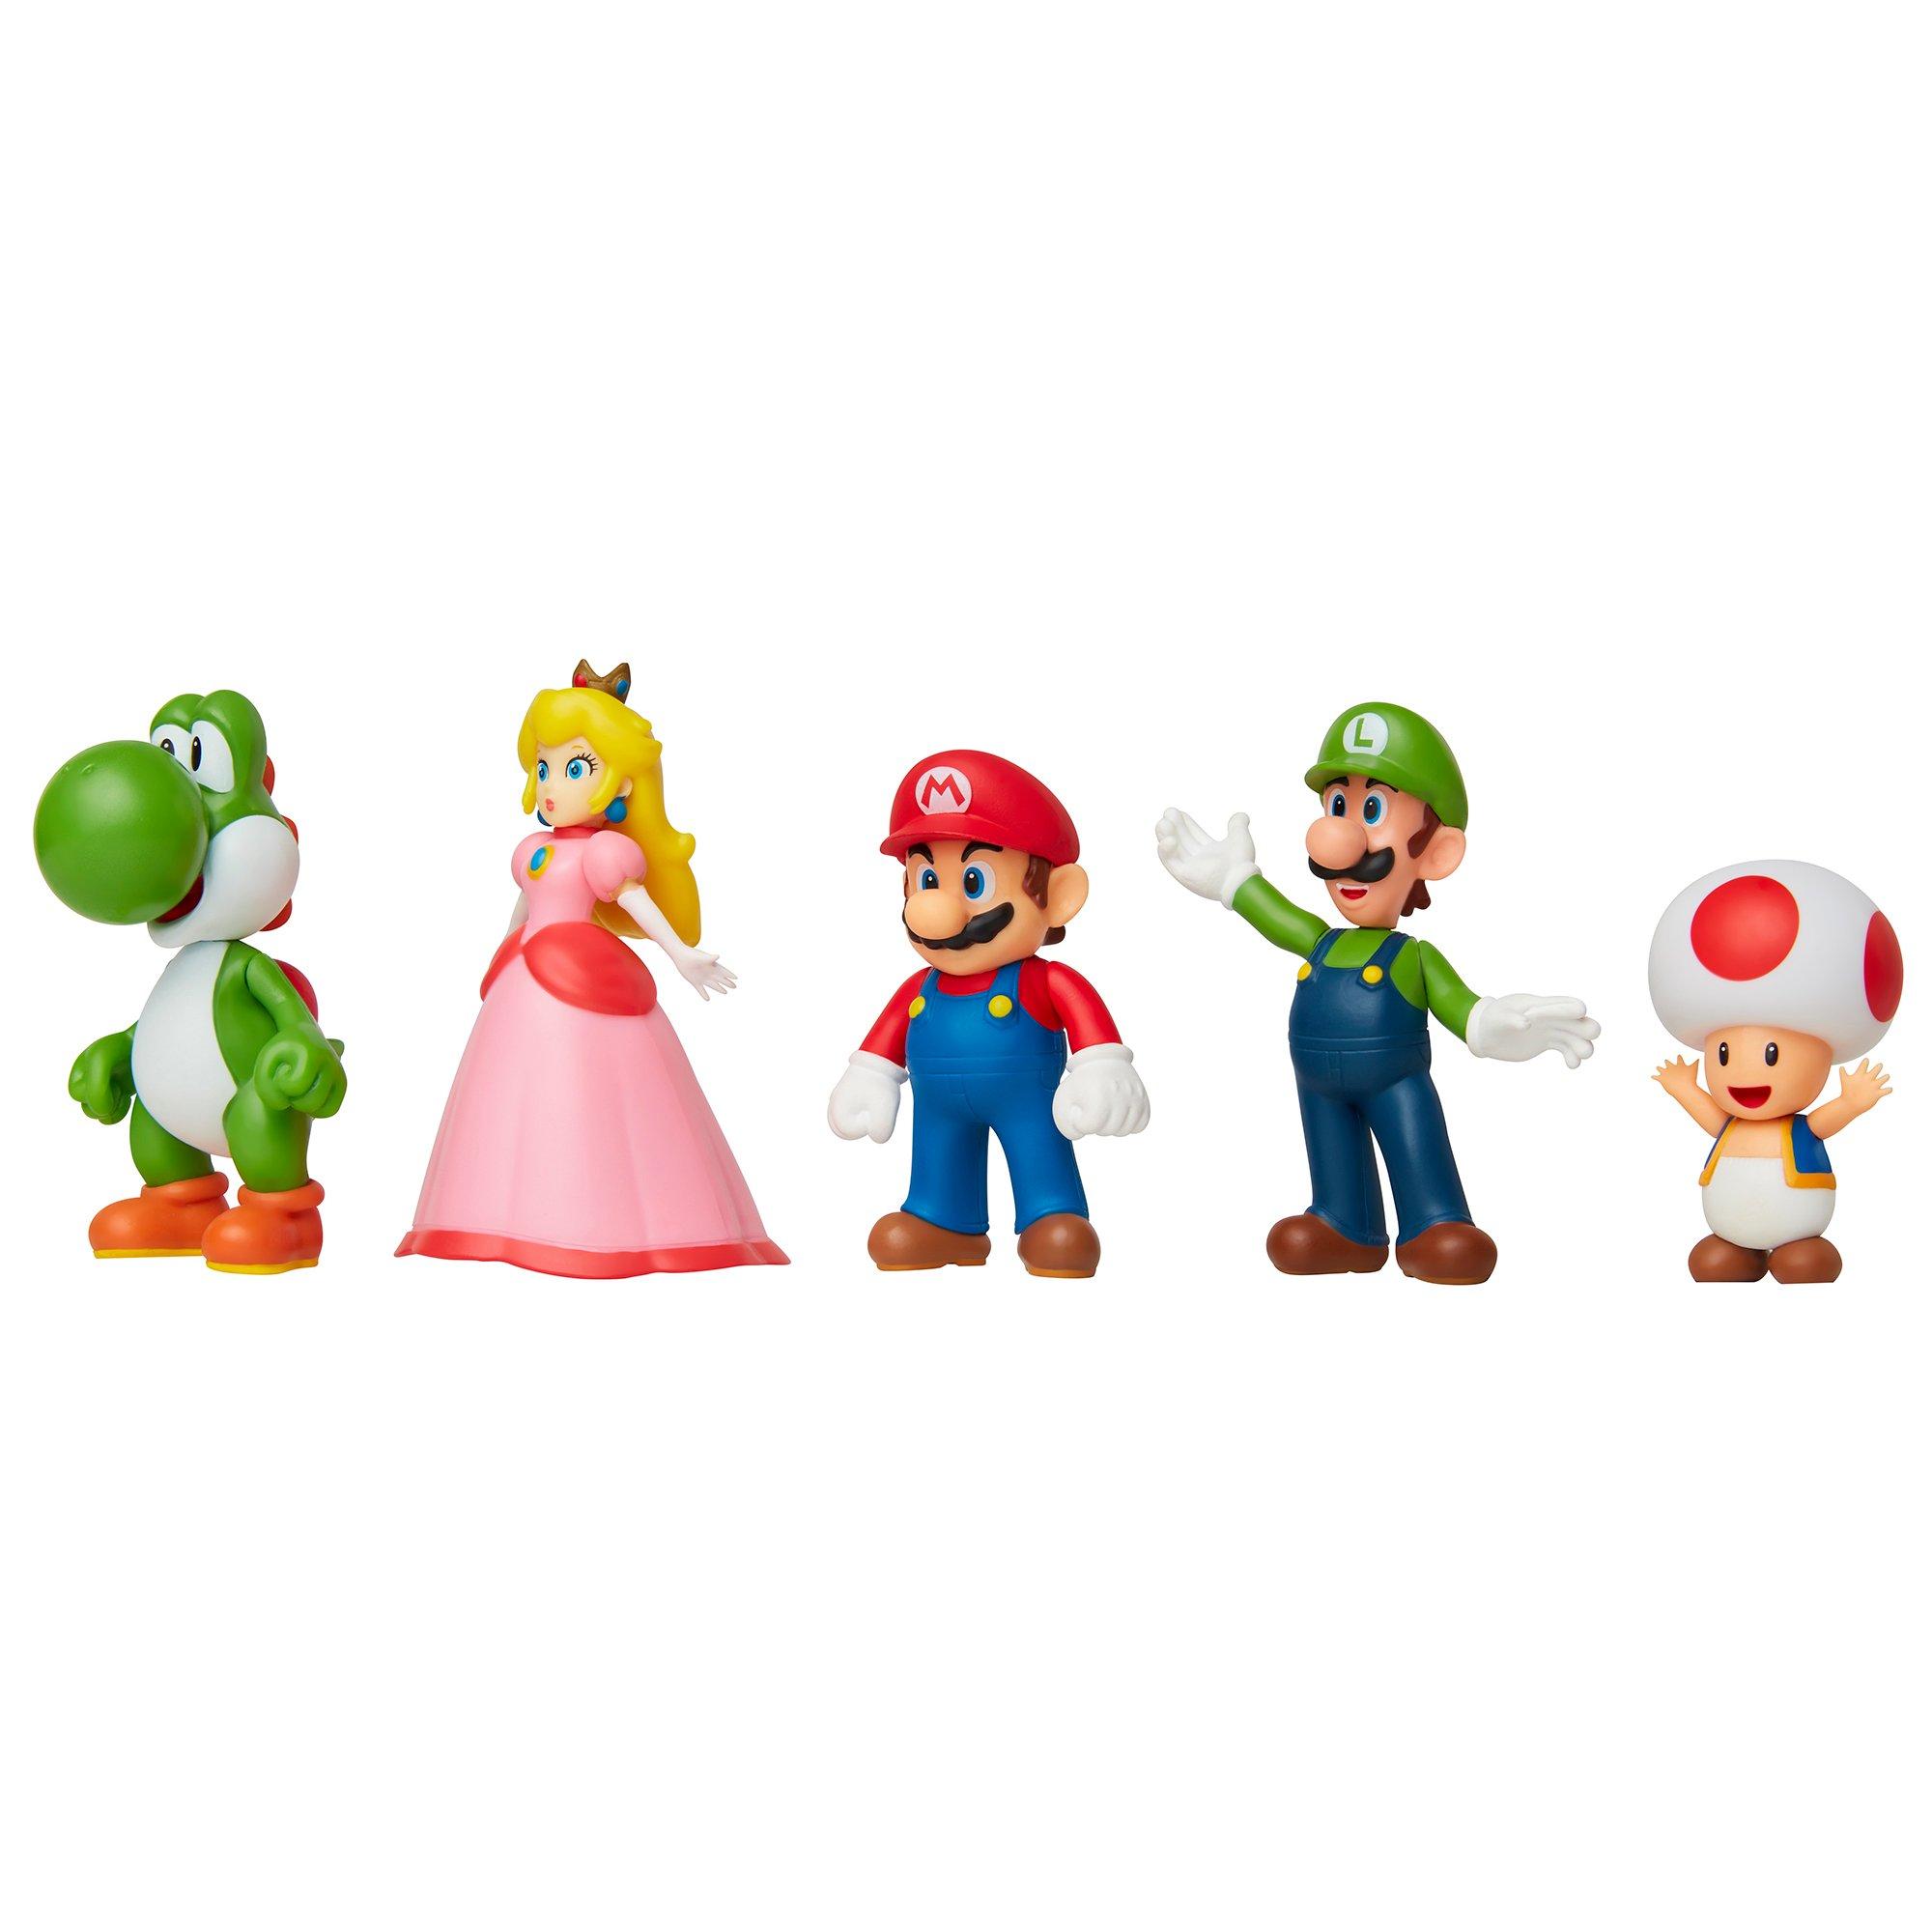 Mario - Mario Kart Figurine by JAKKS